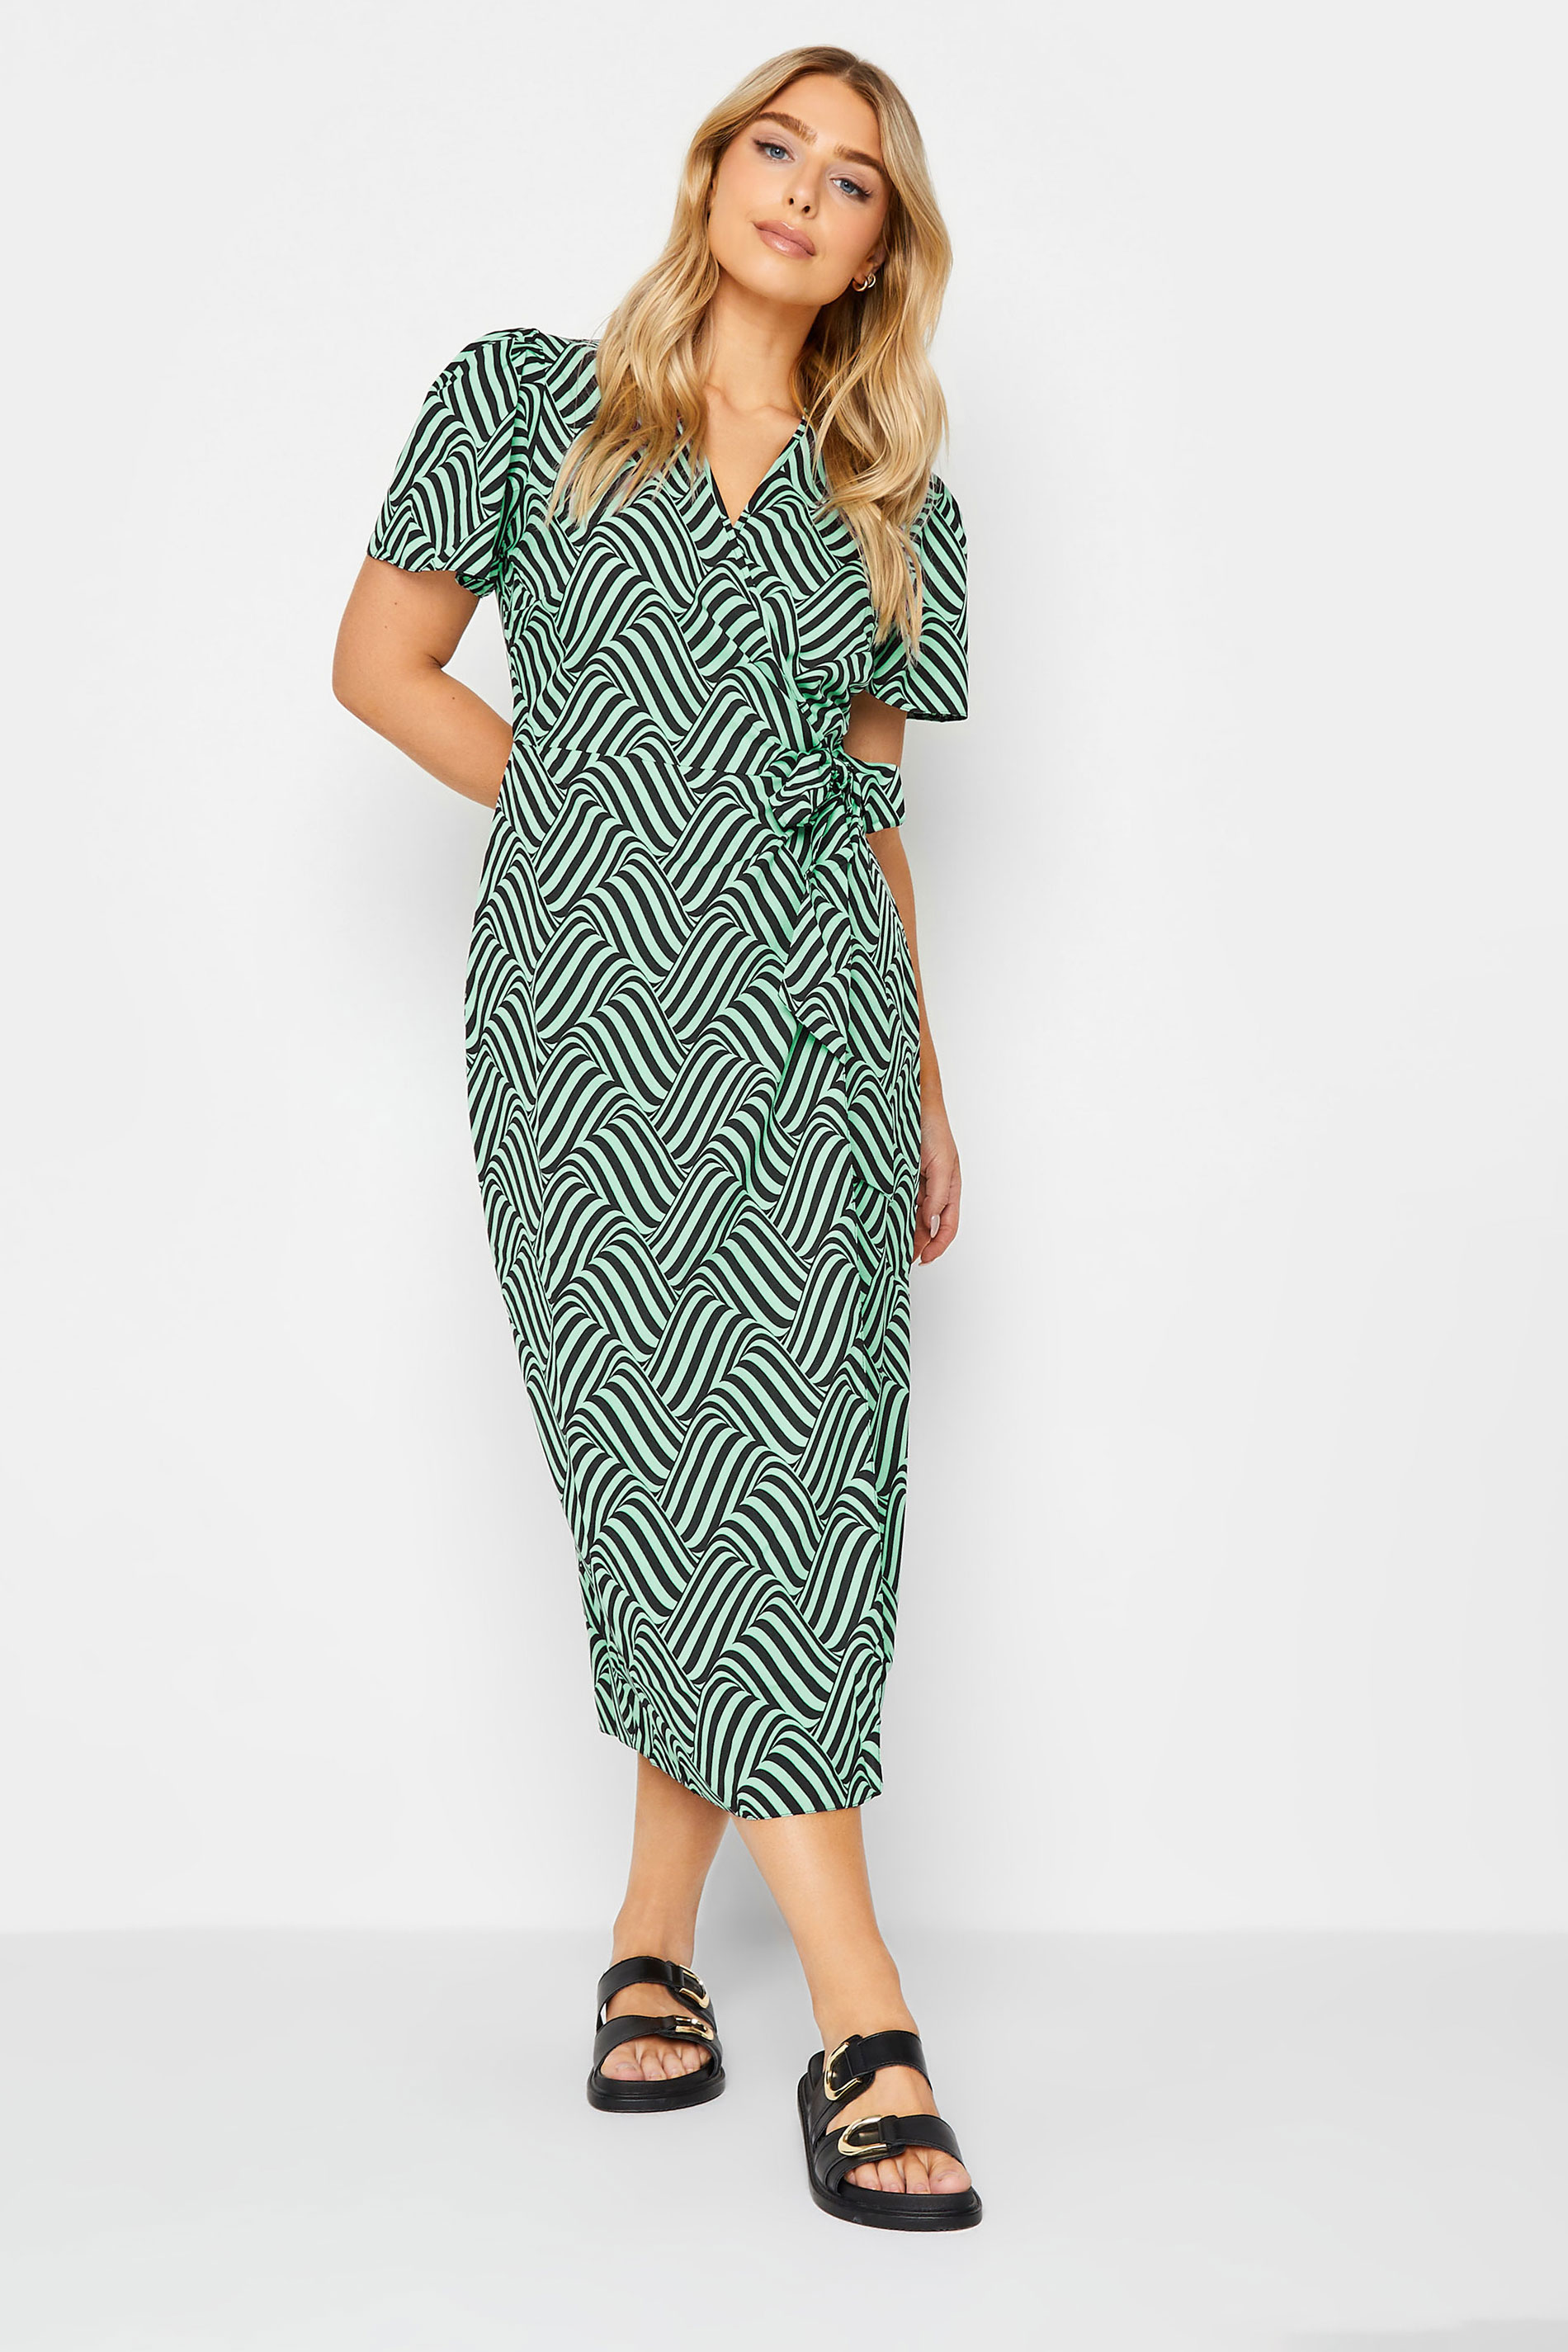 M&Co Green Abstract Stripe Wrap Dress | M&Co 1